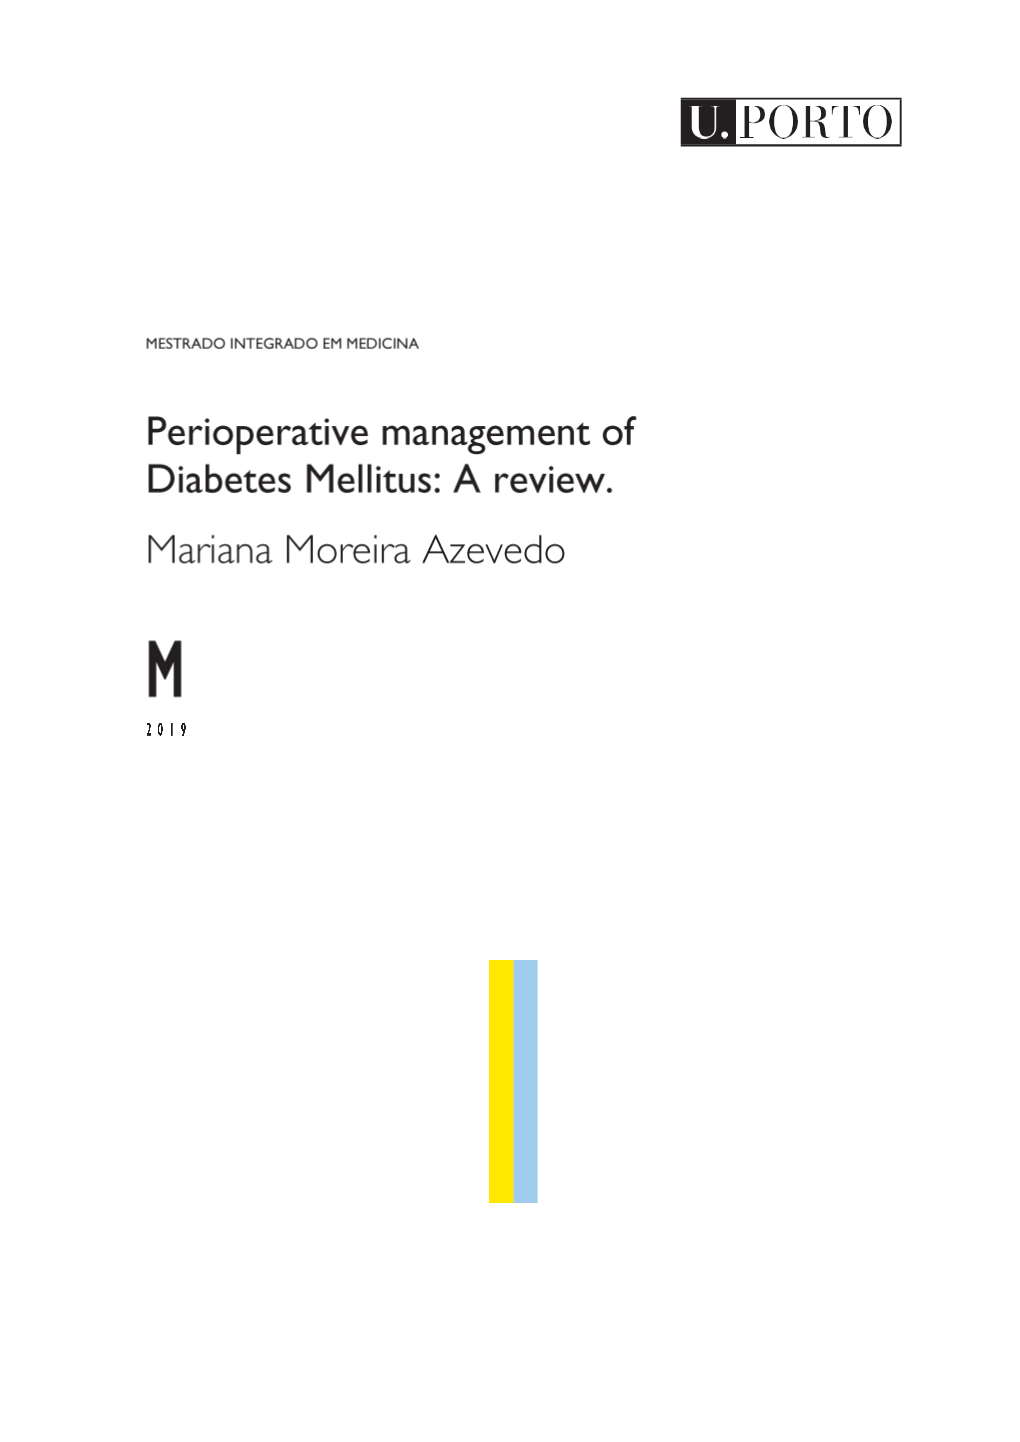 Perioperative Management of Diabetes Mellitus: a Review